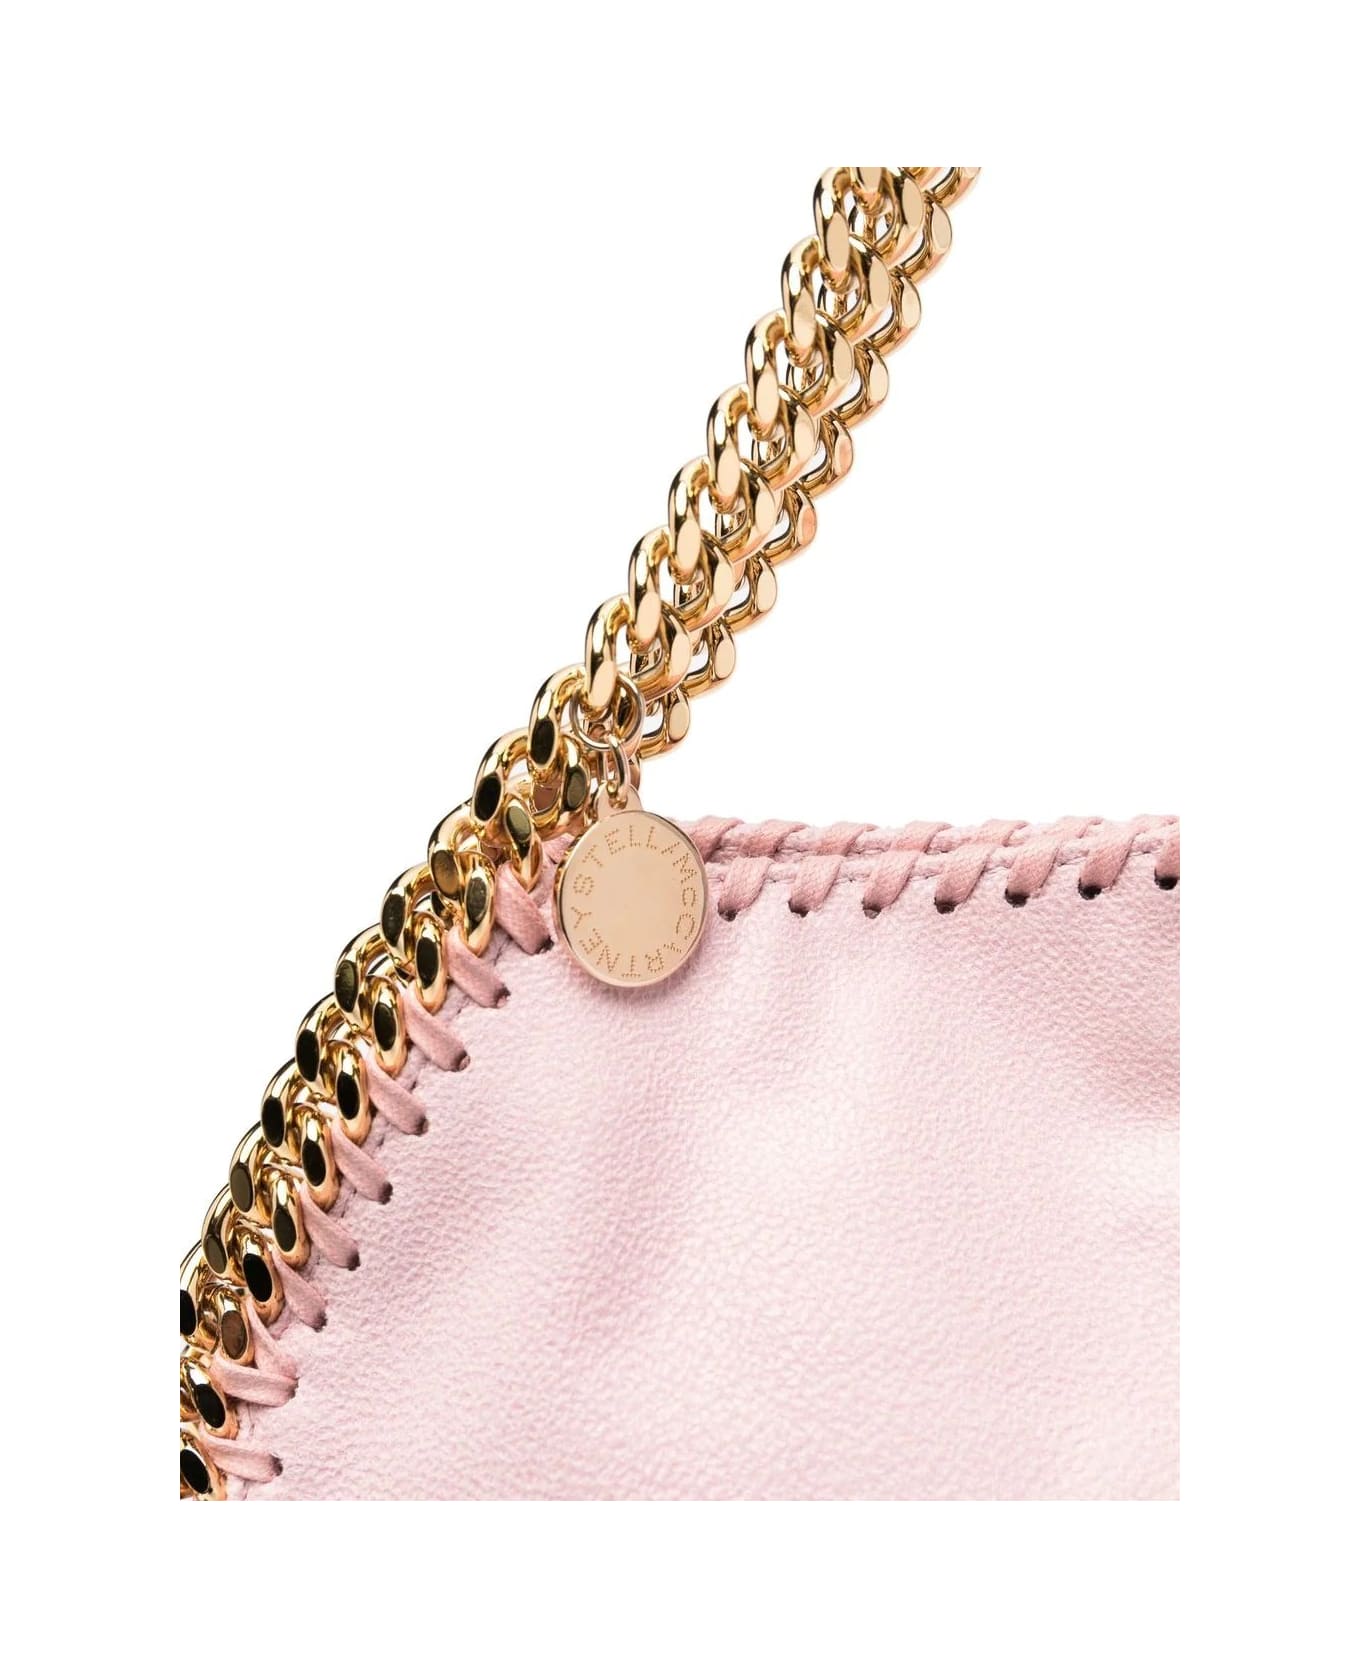 Stella McCartney Pink And Golden Mini Falabella Tote Bag - Rosa